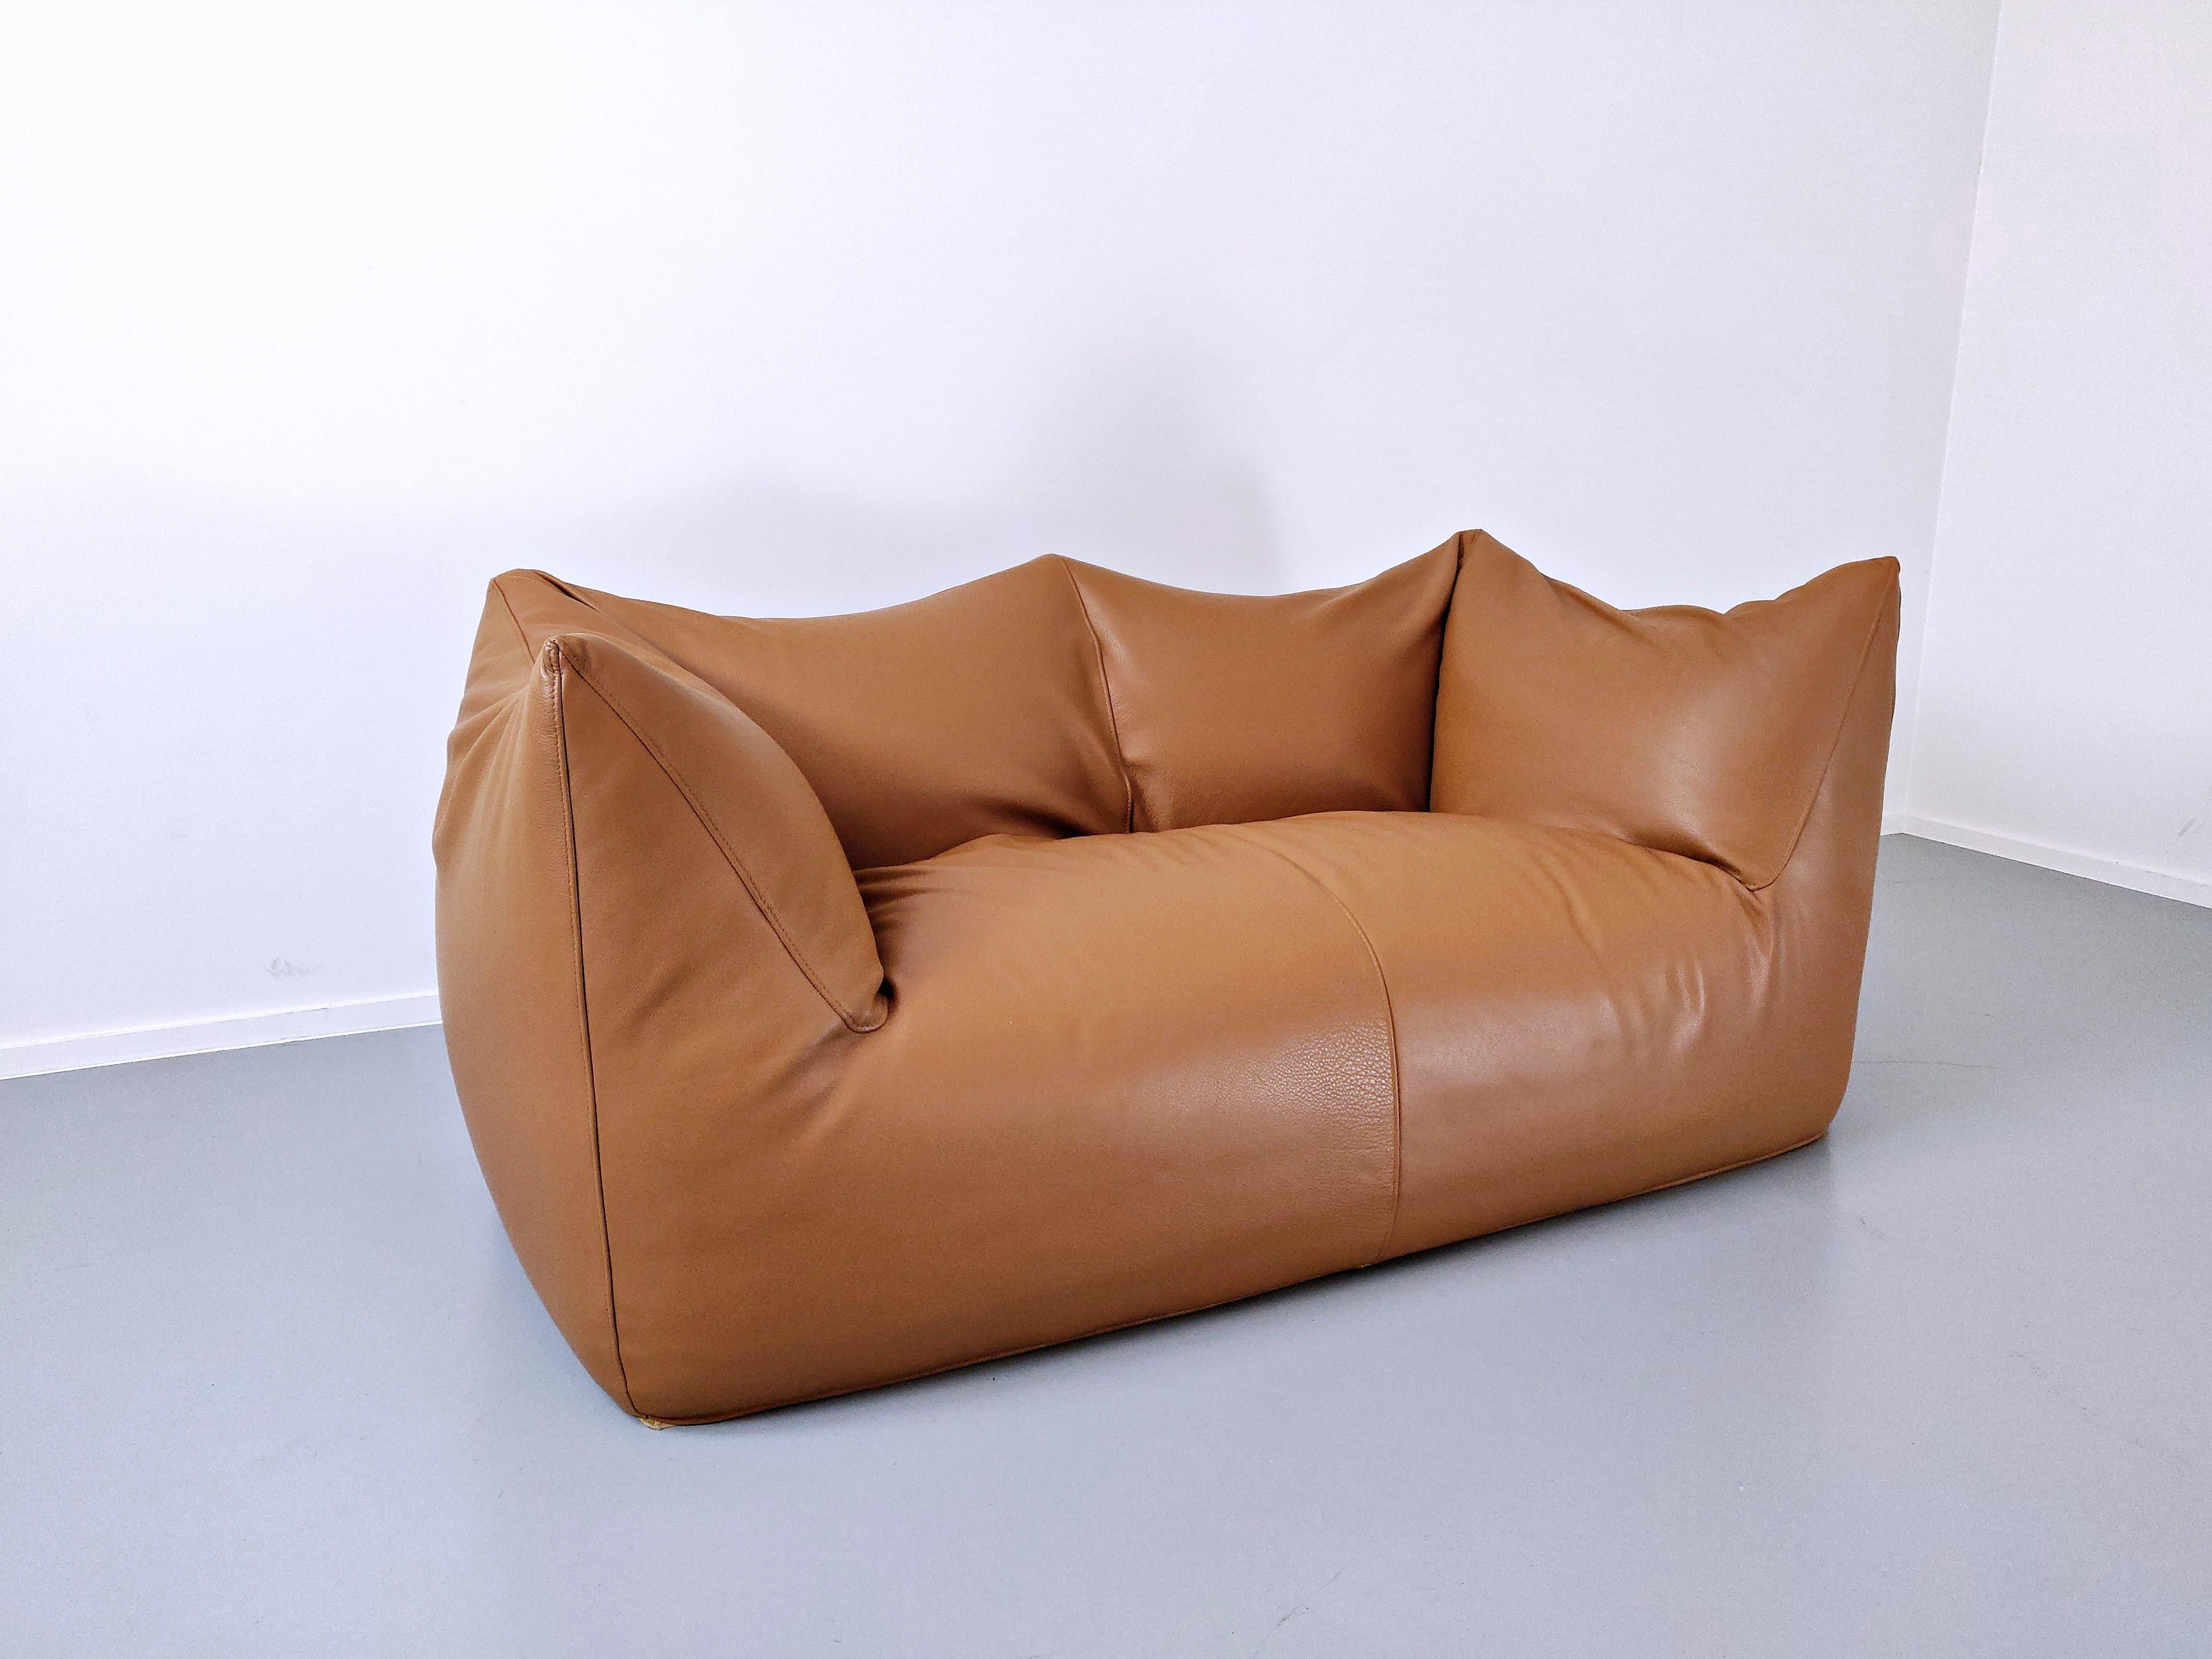 Le Bambole sofa by Mario Bellini for B&B Italia, Italy, 1970s.